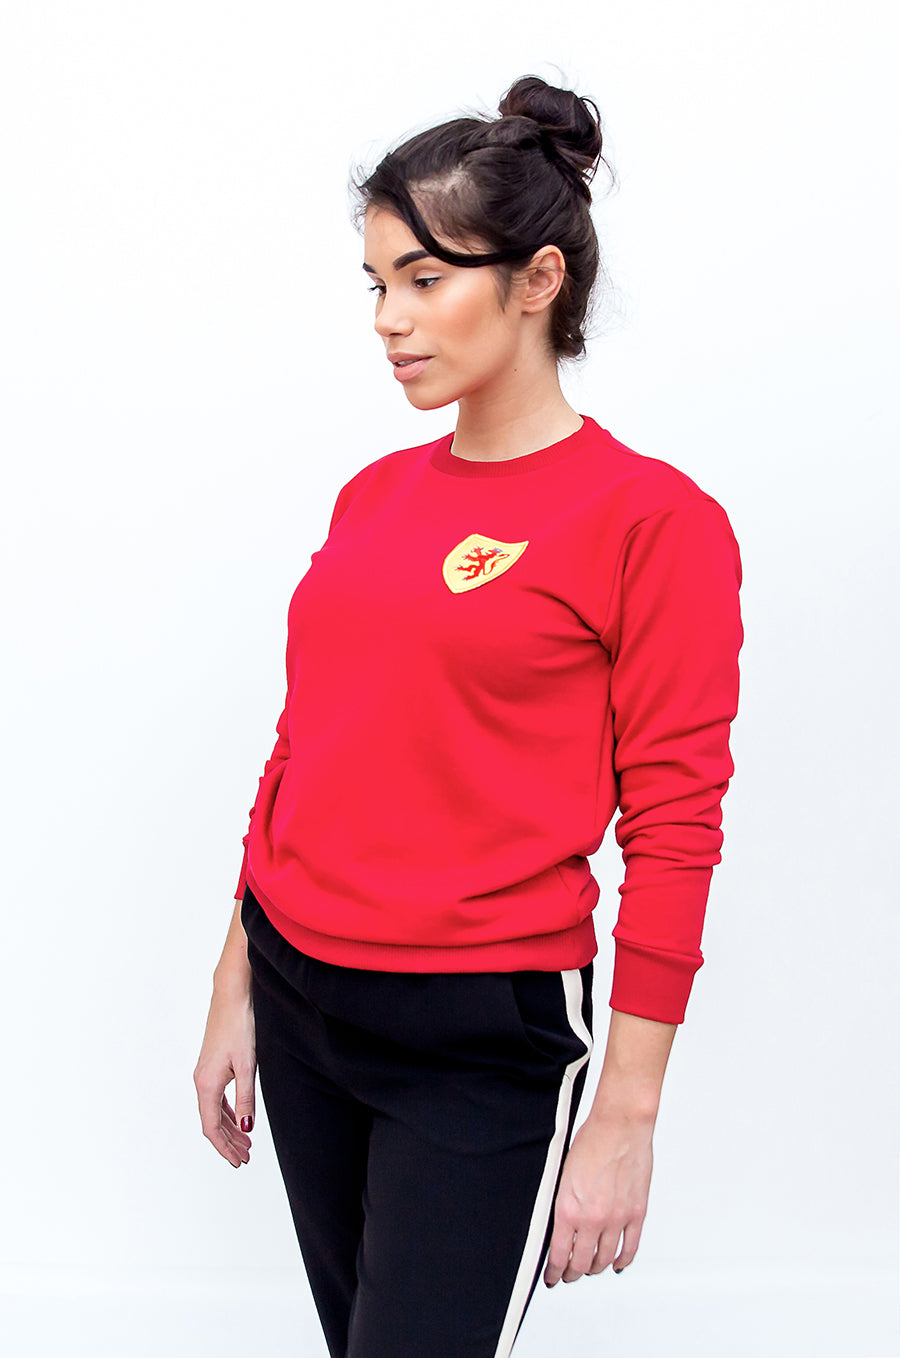 Shabeeg-red-sweatshirt